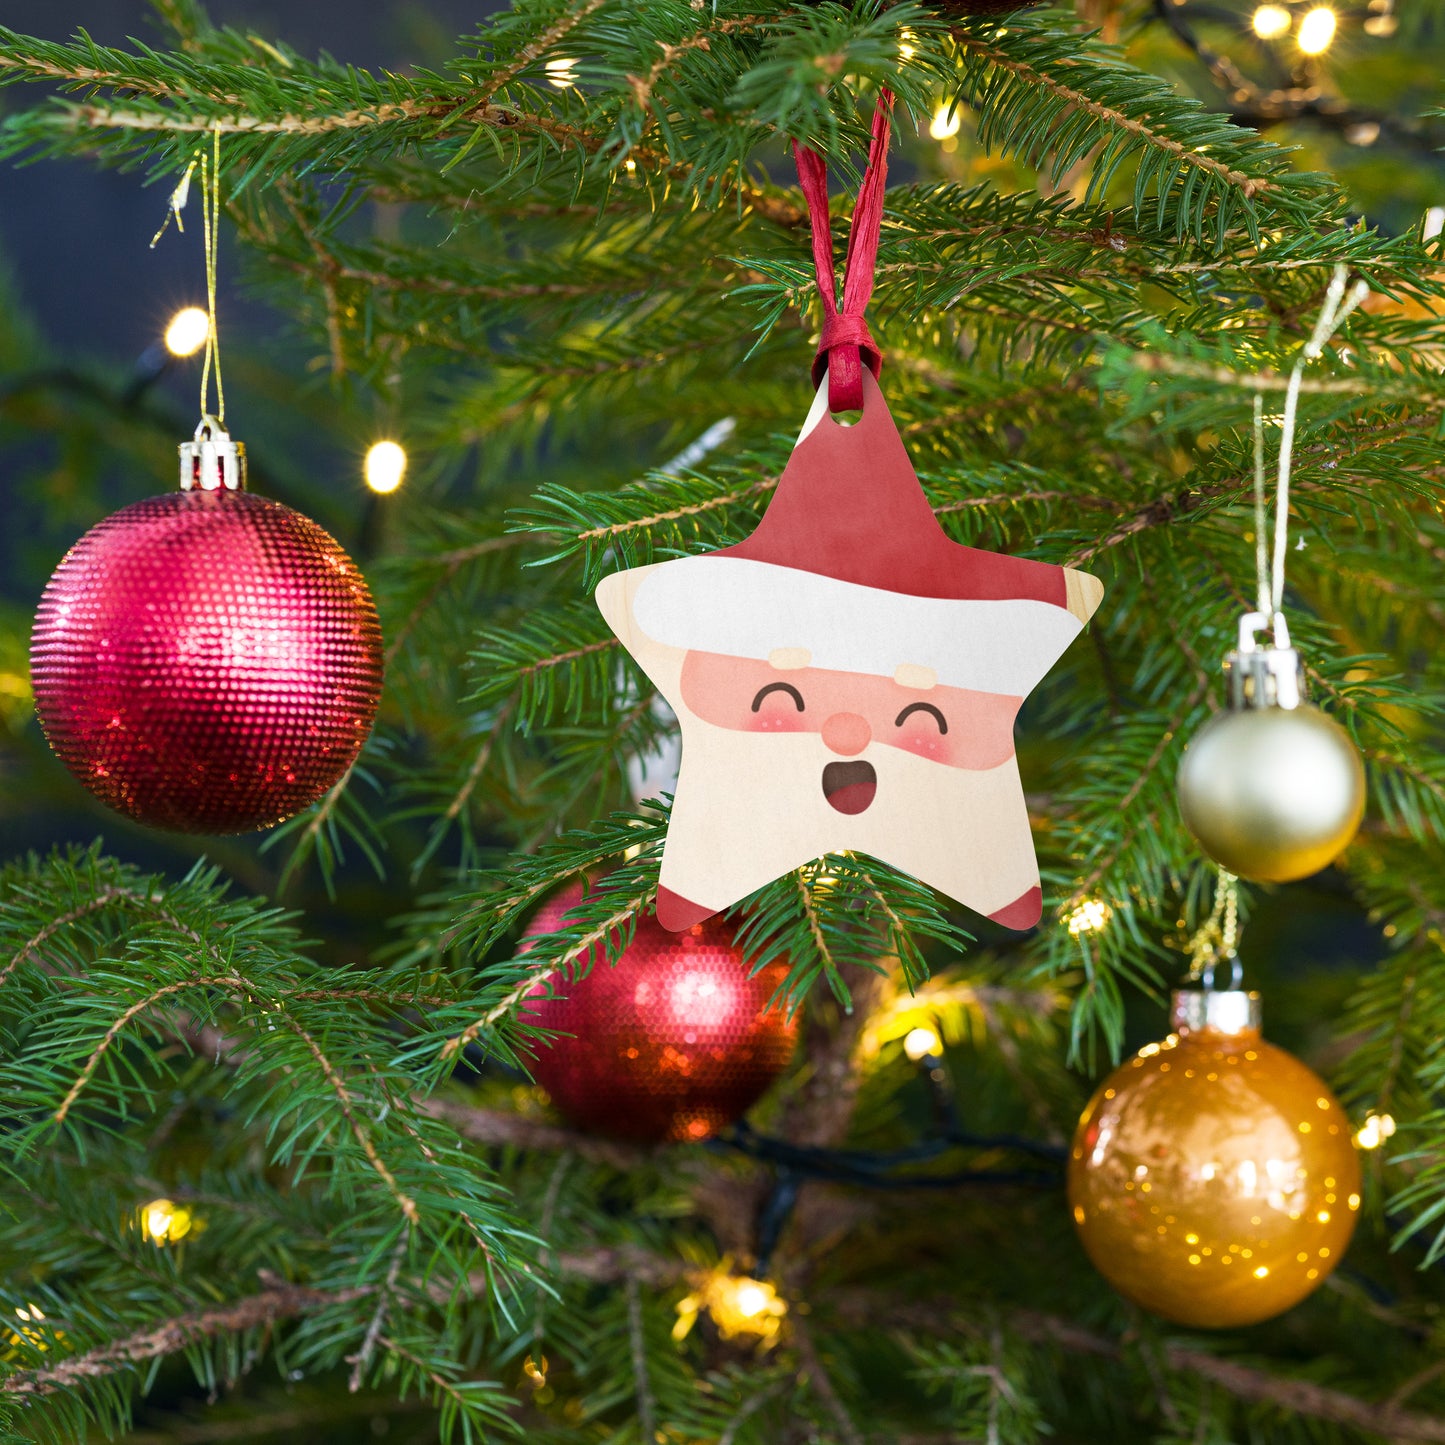 Wooden ornaments - HO HO HO Santa star front